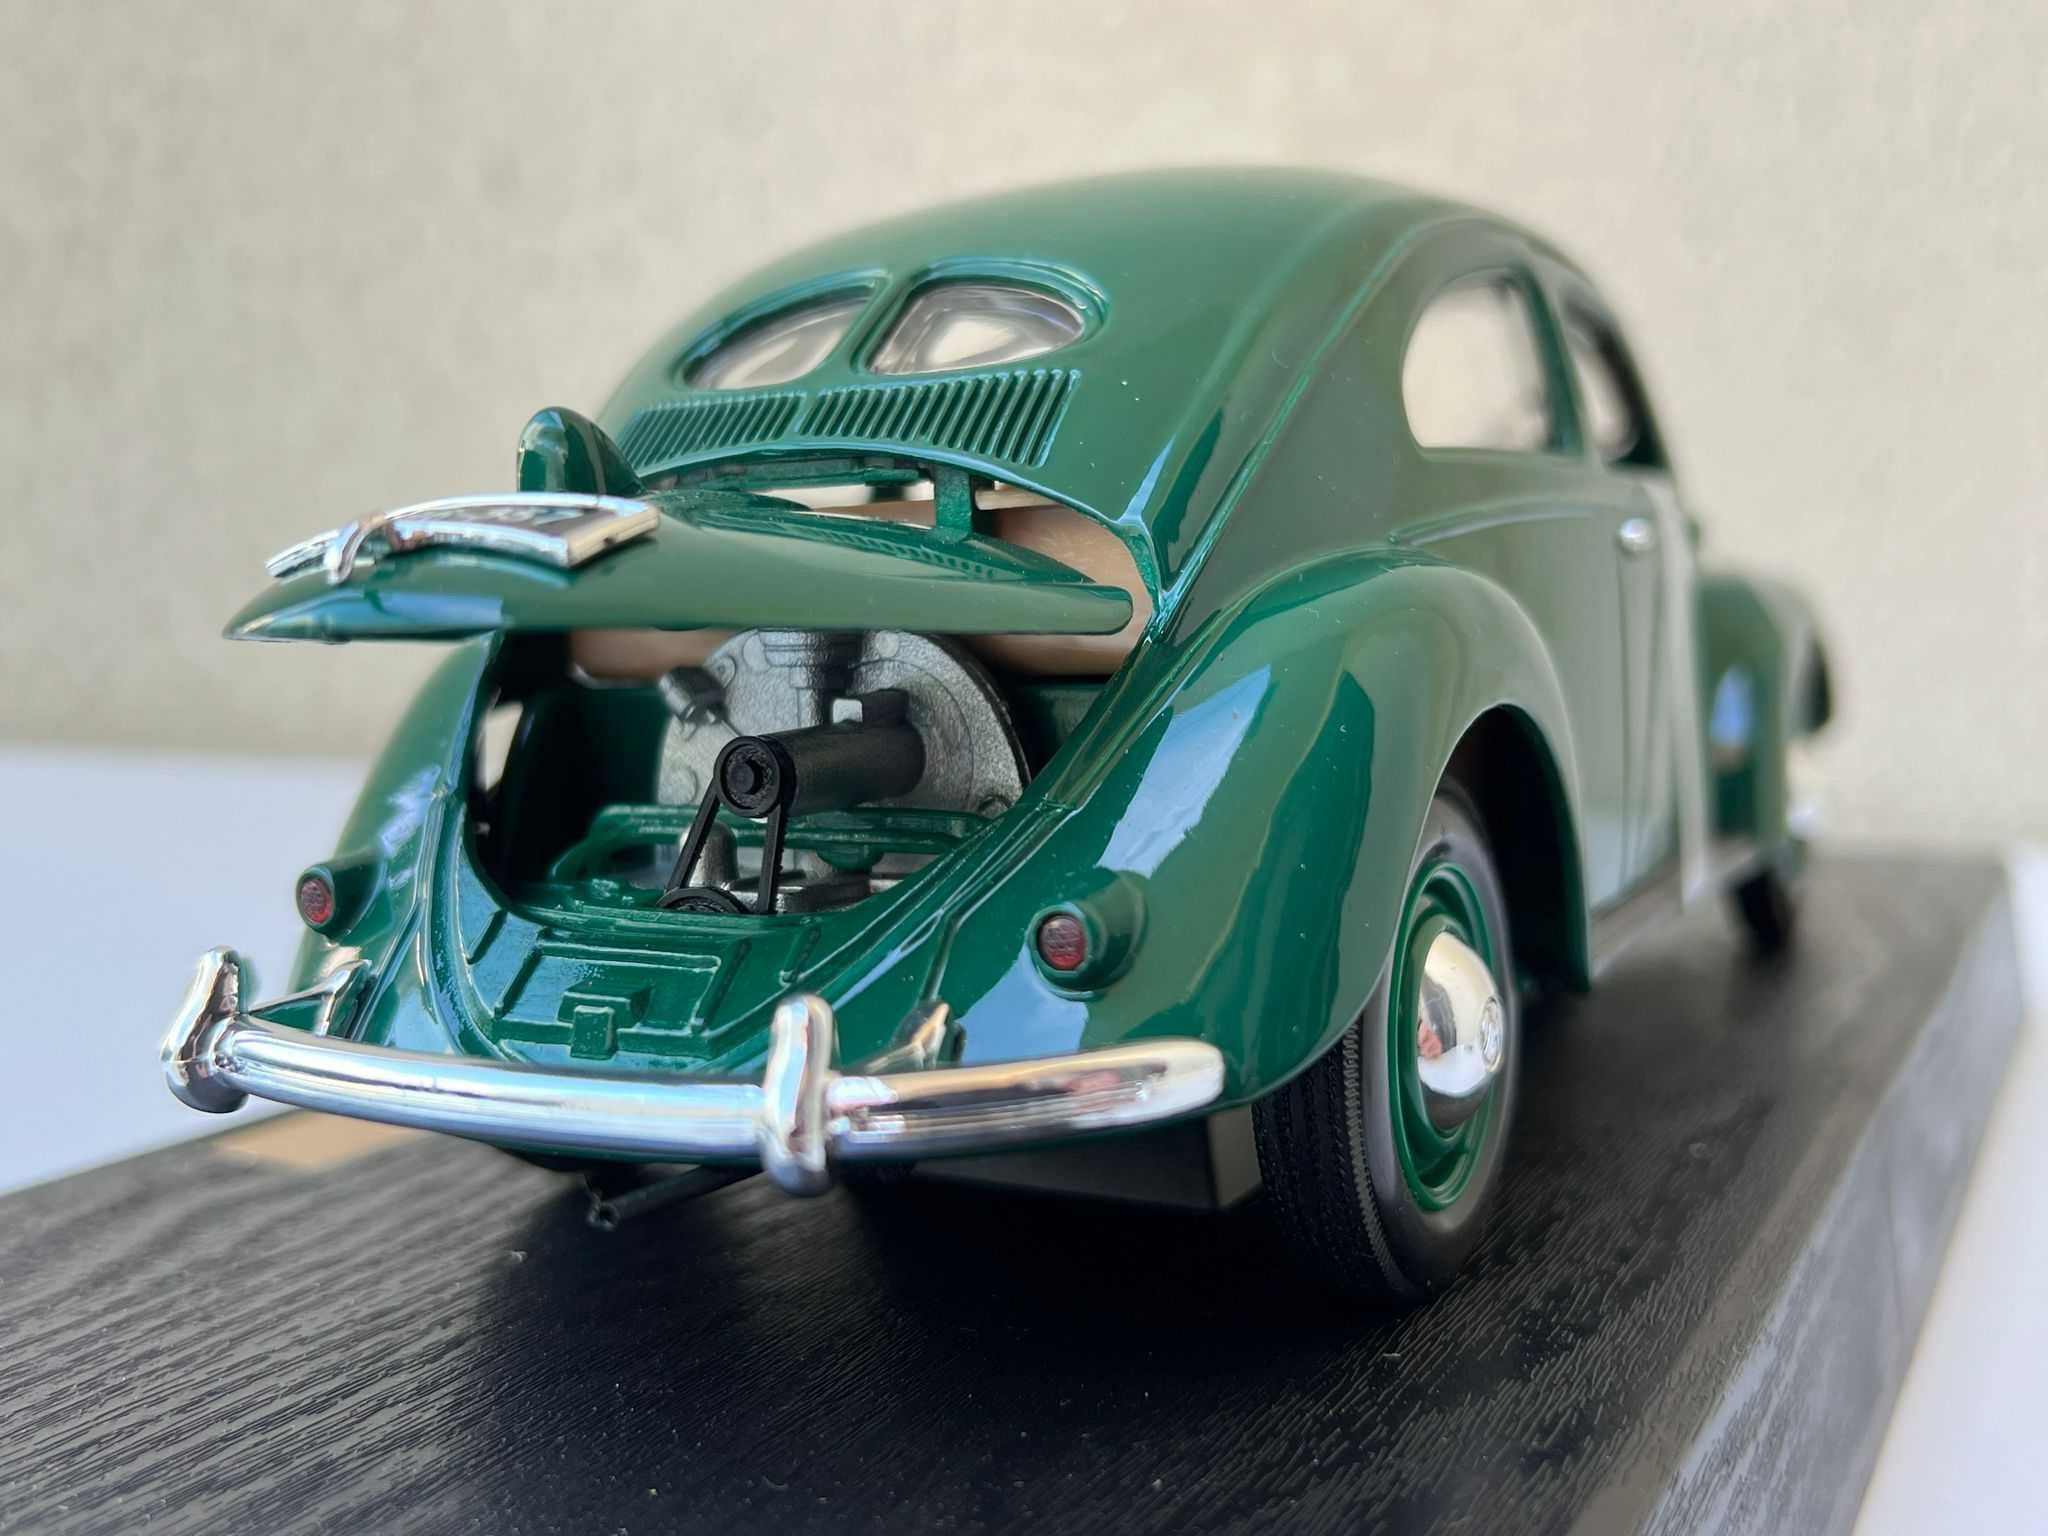 Macheta Auto 1/18 Premium Edition Maisto VW Beetle 1961